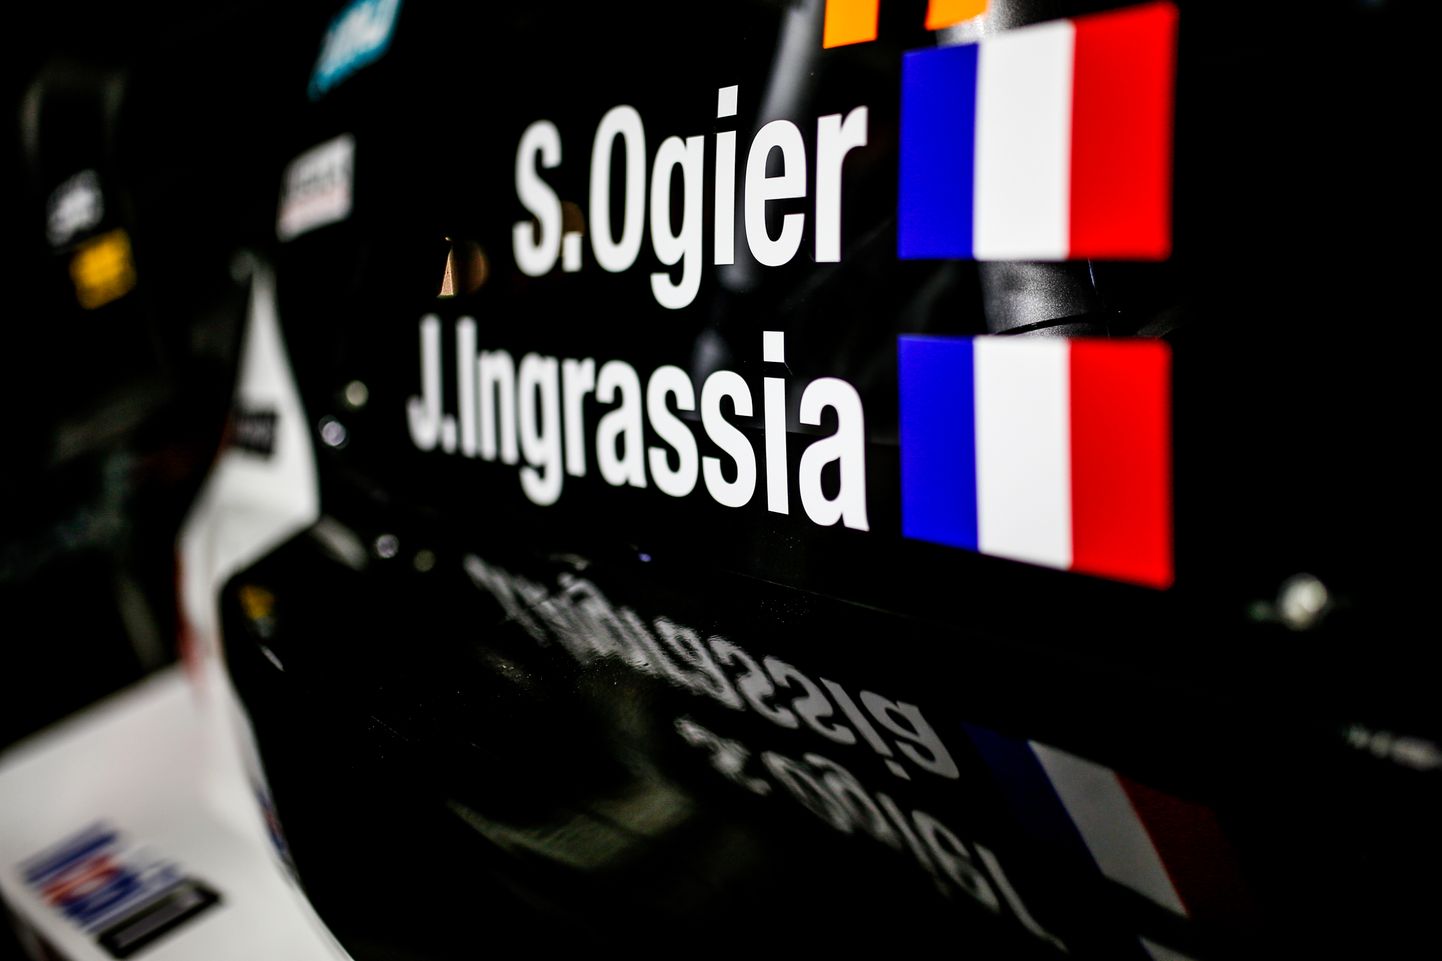 Sébastien Ogier ja Julien Ingrassia nimed küljeklaasil.